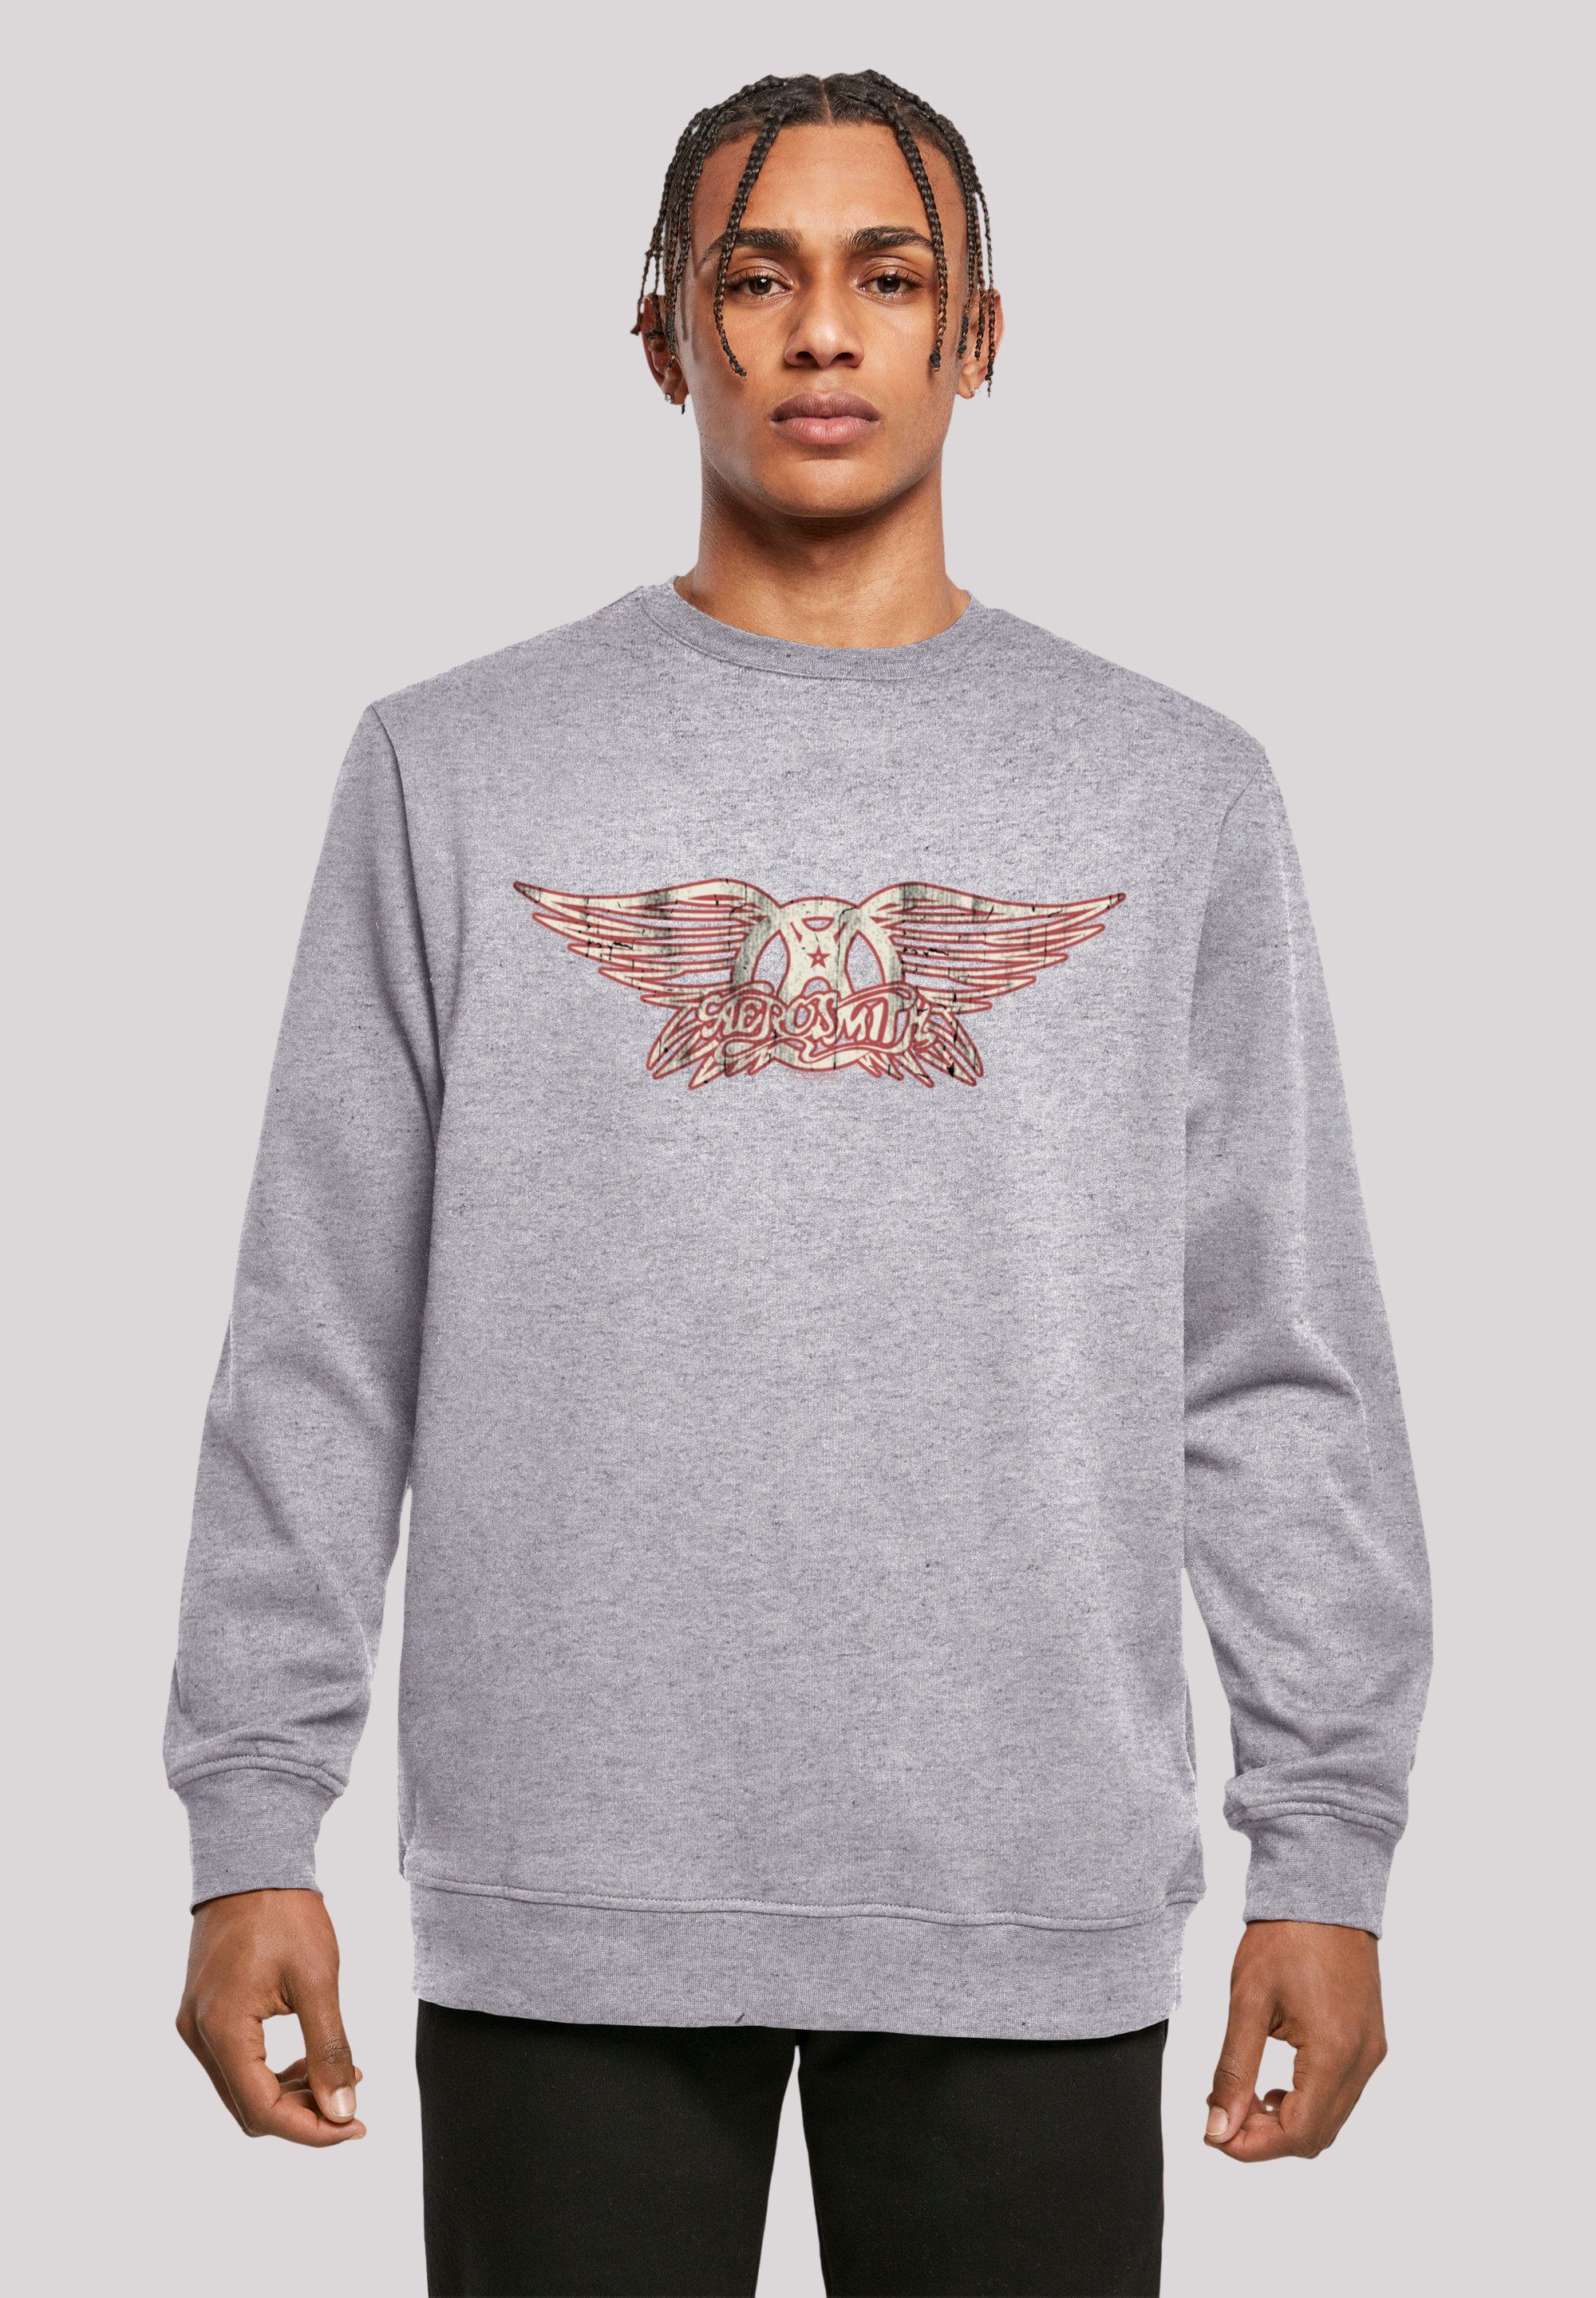 Aerosmith heather Rock grey Band F4NT4STIC Qualität, Rock-Musik, Band Logo Premium Sweatshirt